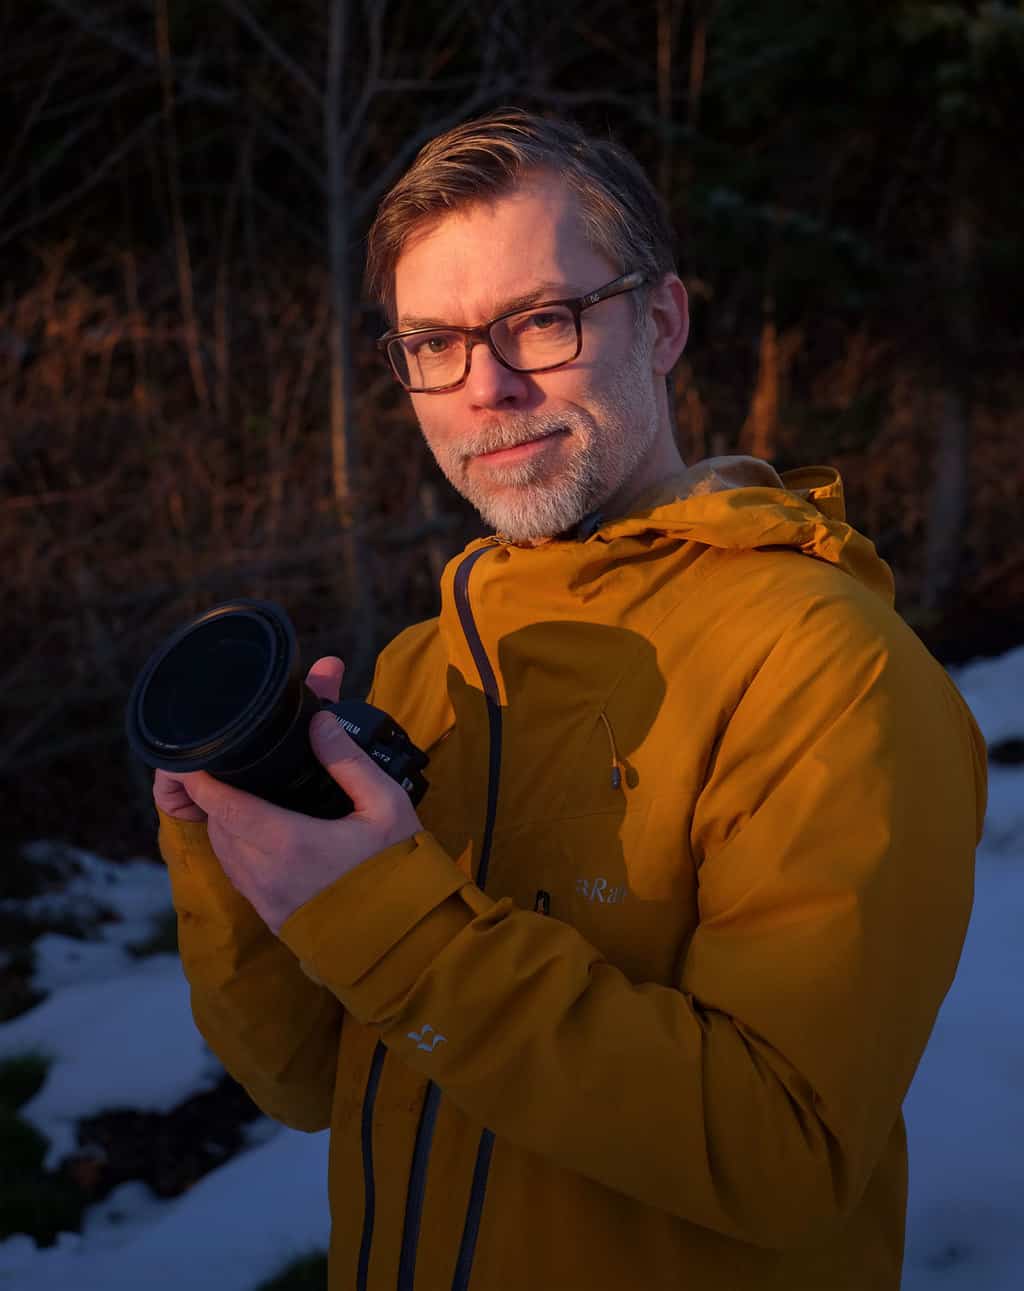 My Interview with Photographer Hans Gunnar Aslaksen